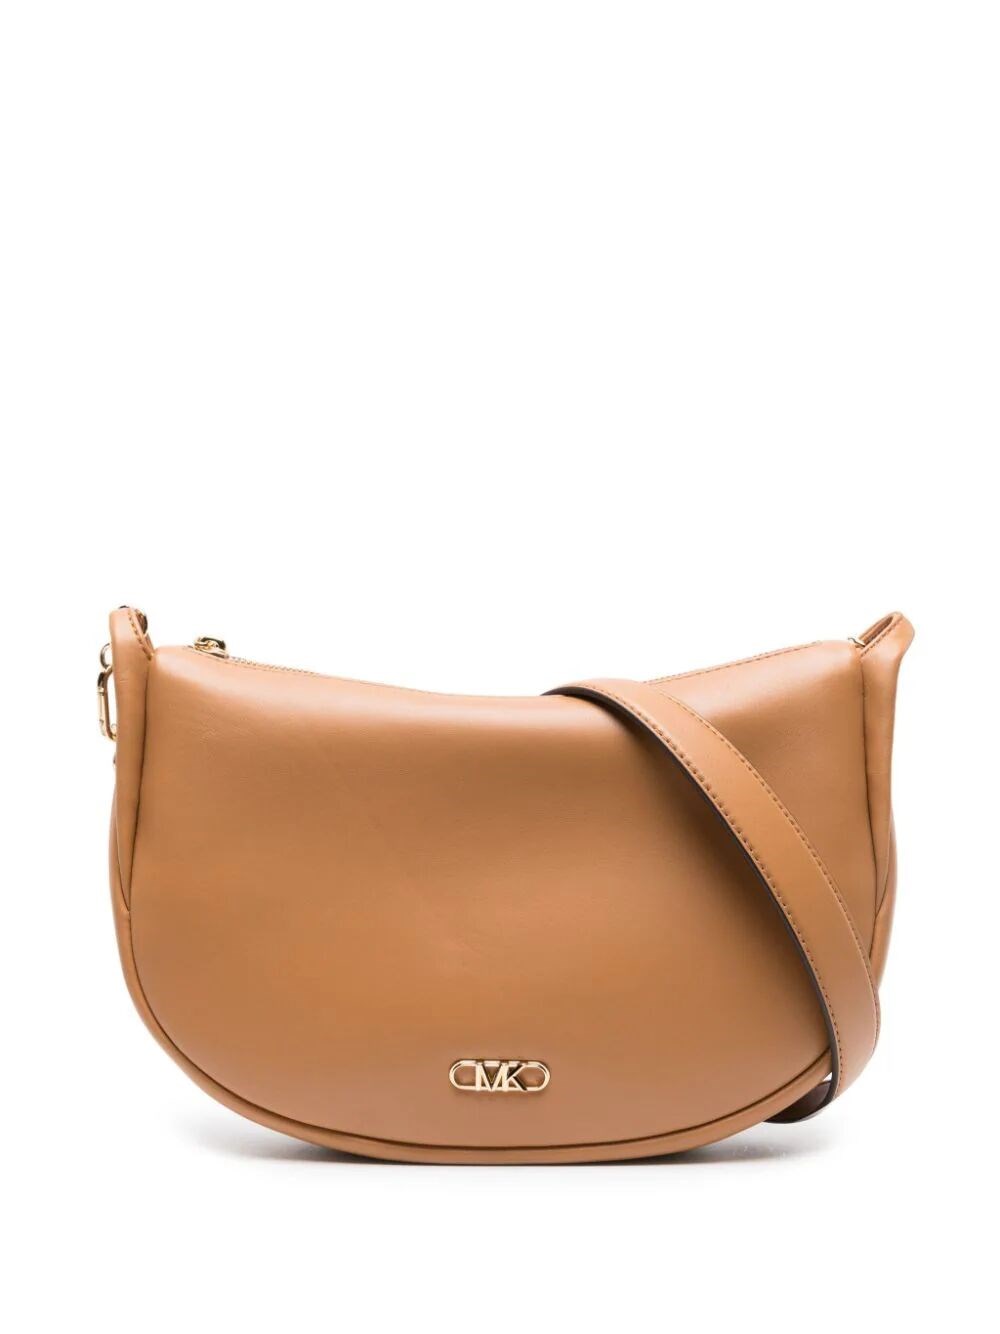 Michael Kors Mk Kendall Leather Shoulder Bag In Brown